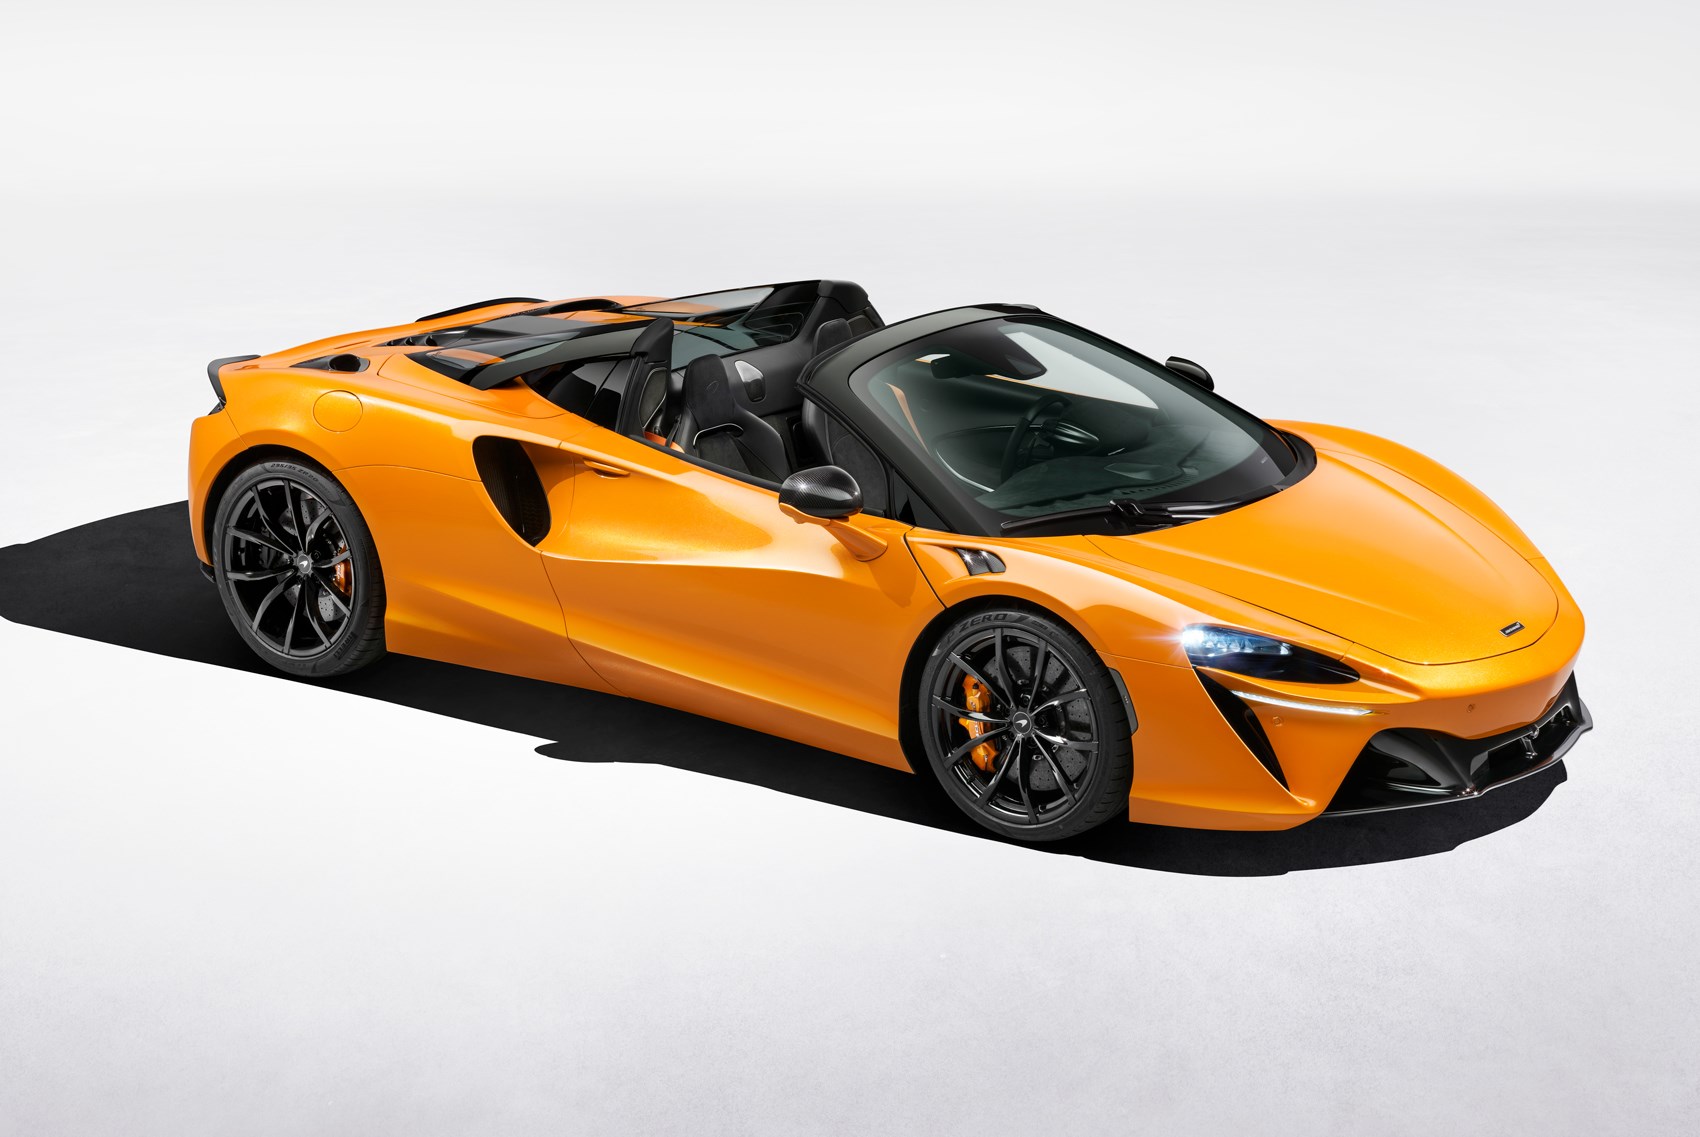 McLaren’s Artura Spider introduces improvements to hybrid supercar